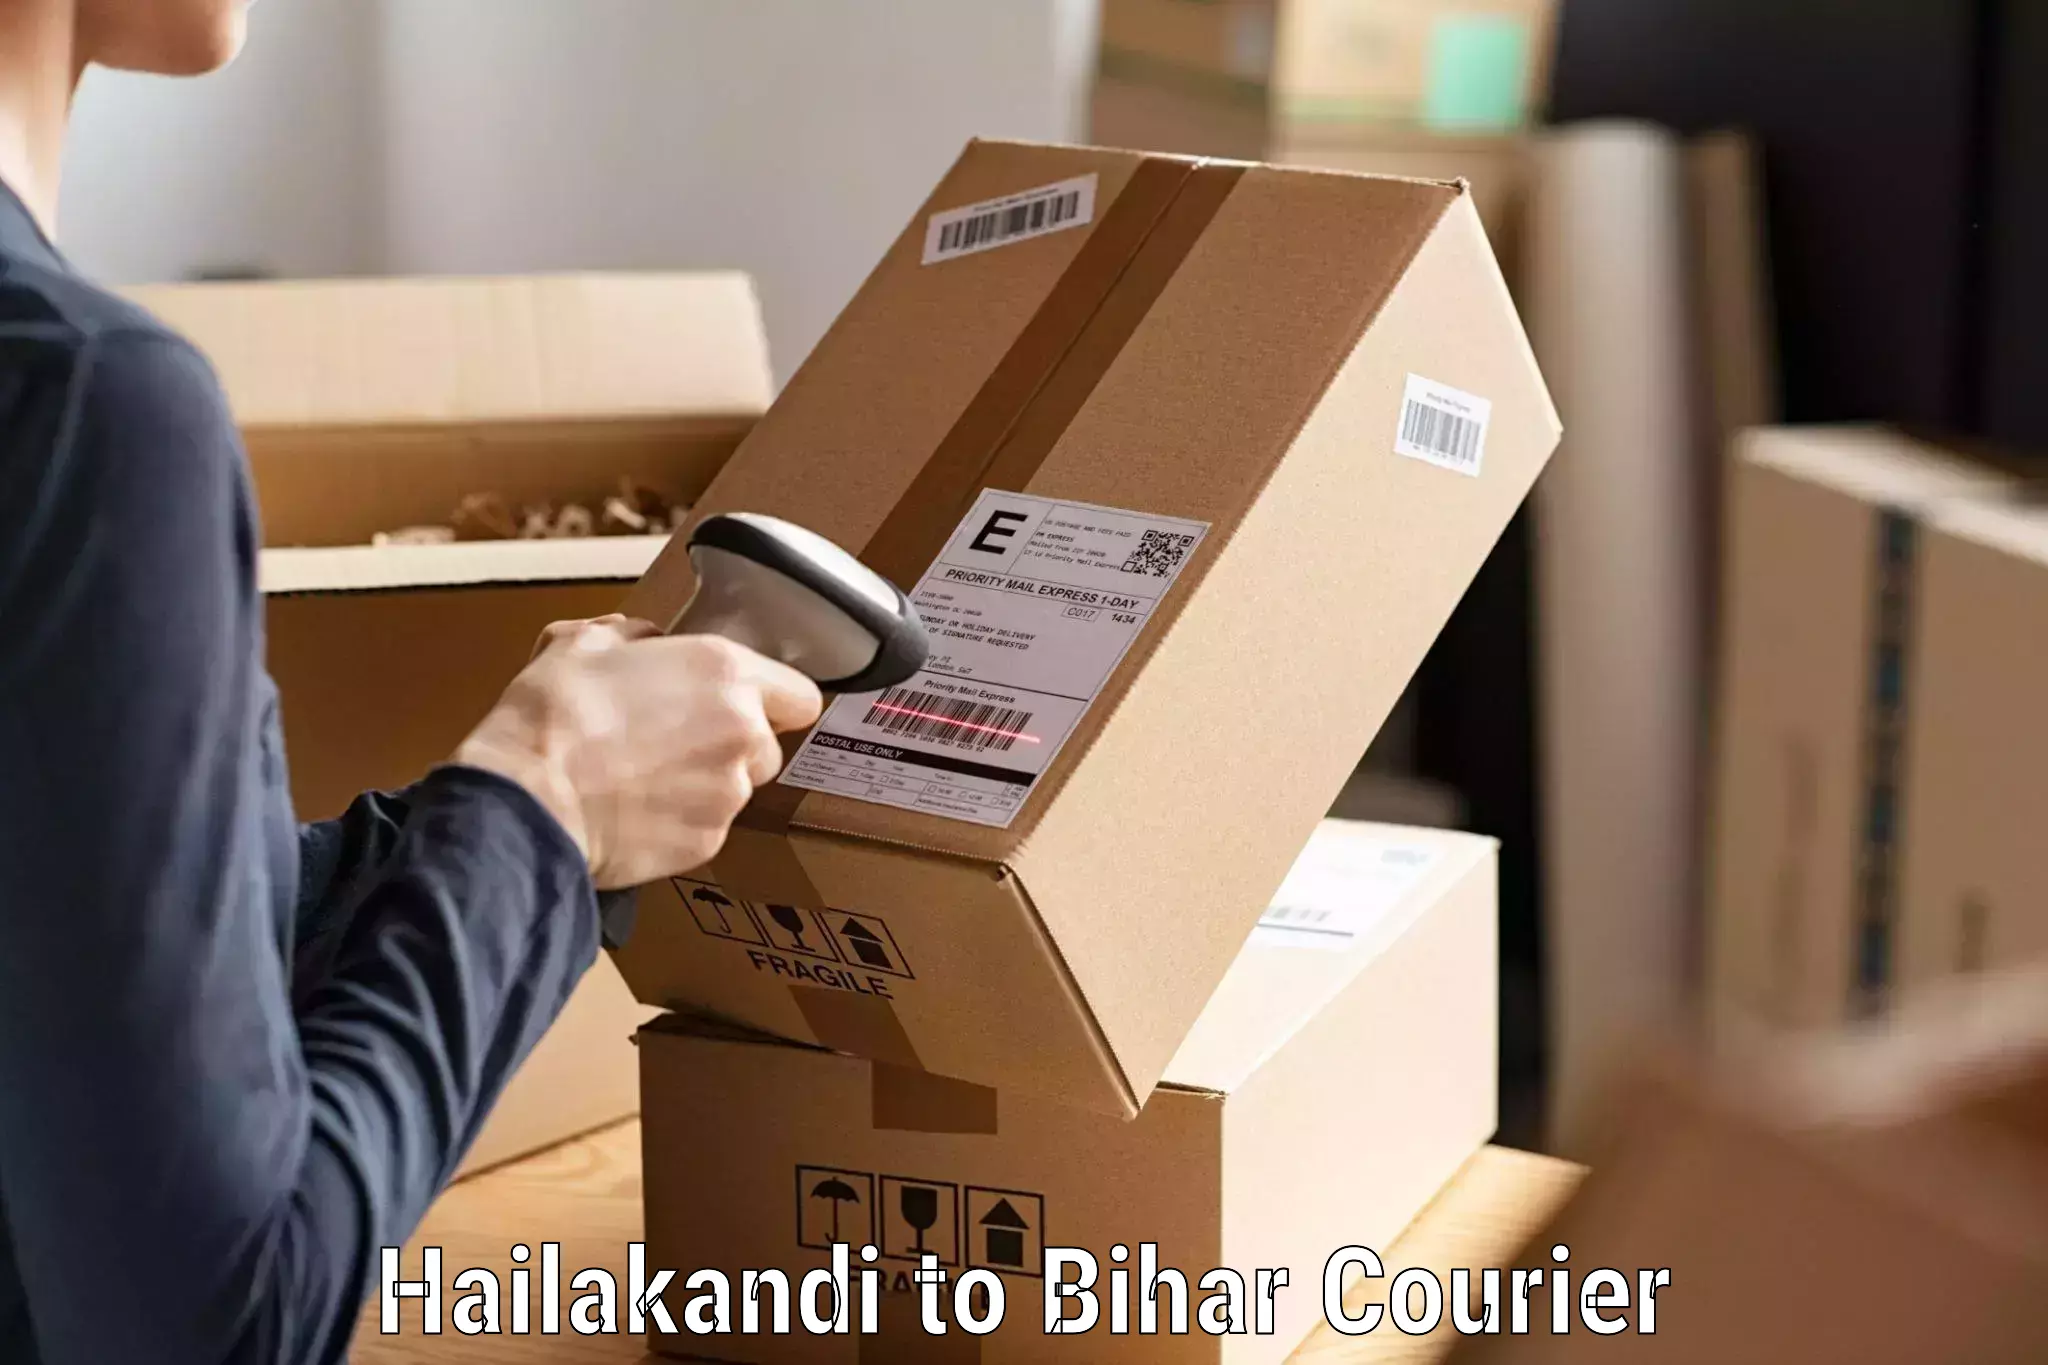 Courier service booking Hailakandi to Patna